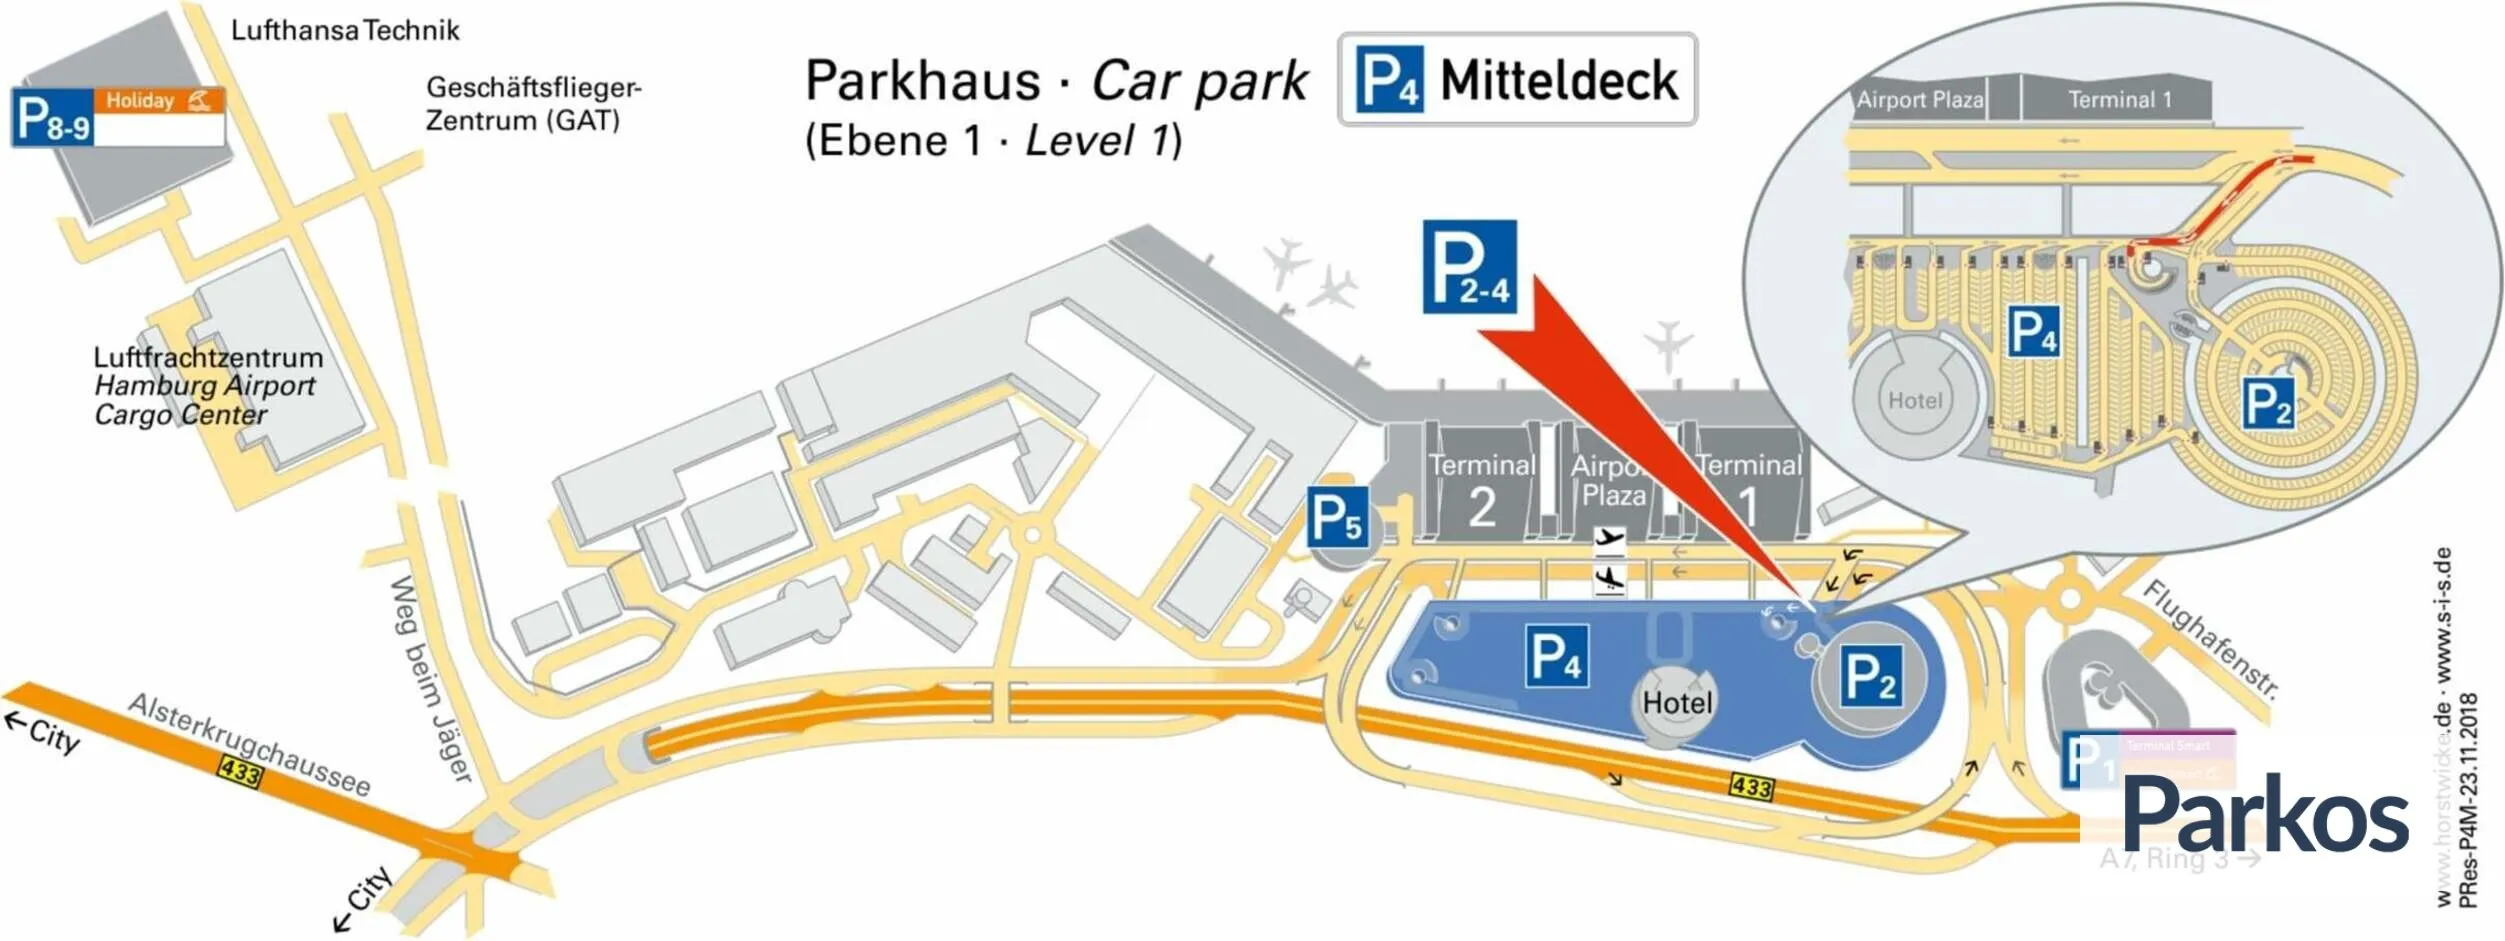 Hamburg Airport P4 Mitteldeck - Hamburg Airport Parking - picture 1